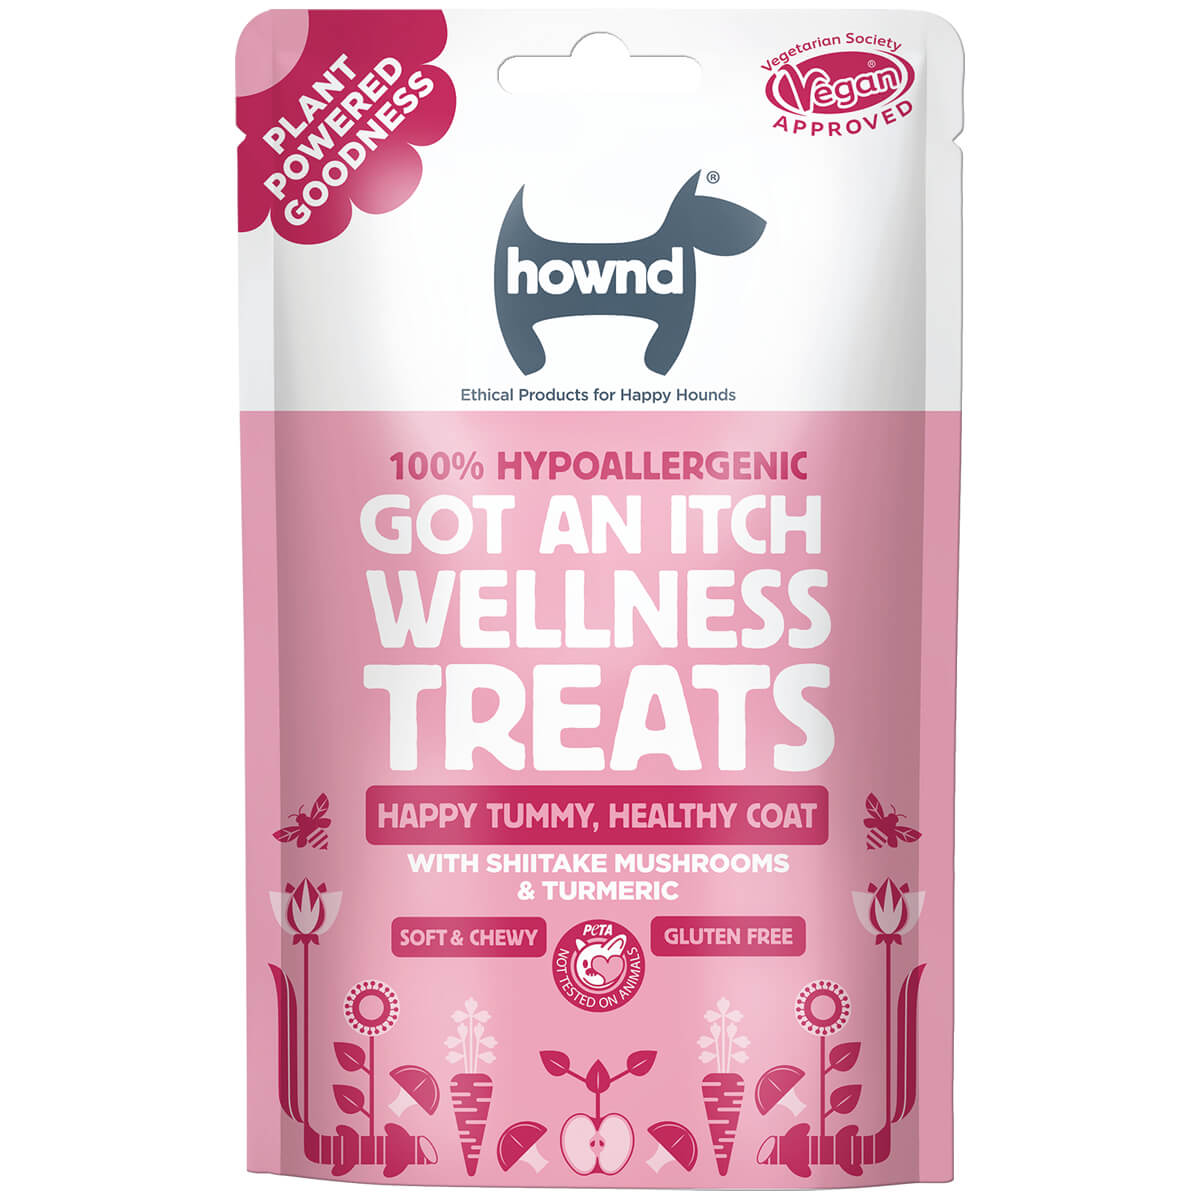 hownd got an itch vegan hypoallergenic wellness treats - front view